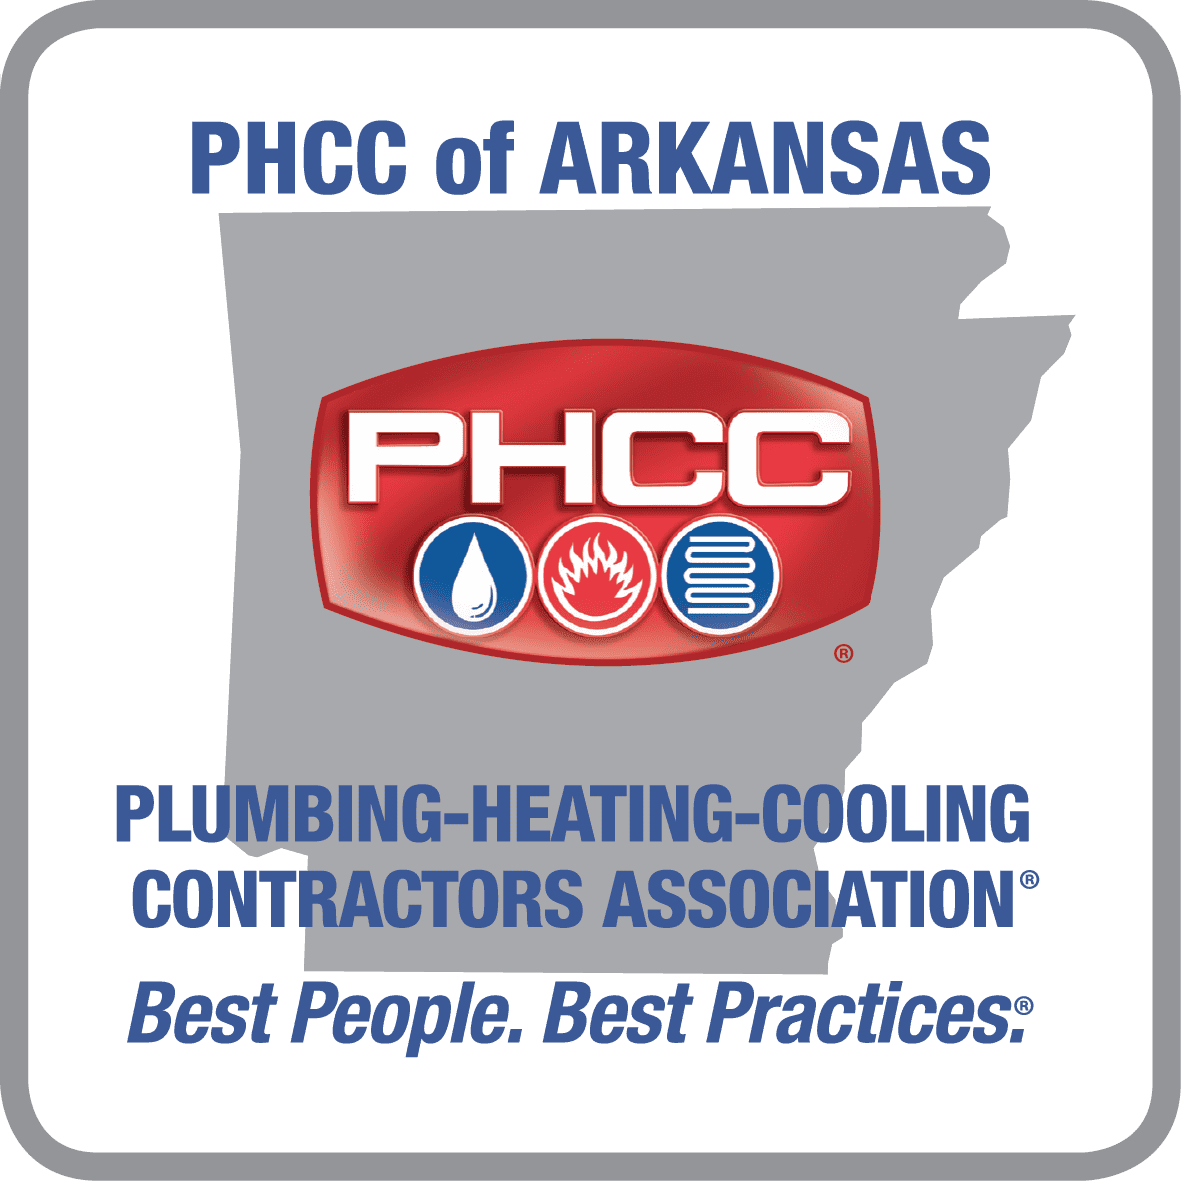 PHCC of Arkansas